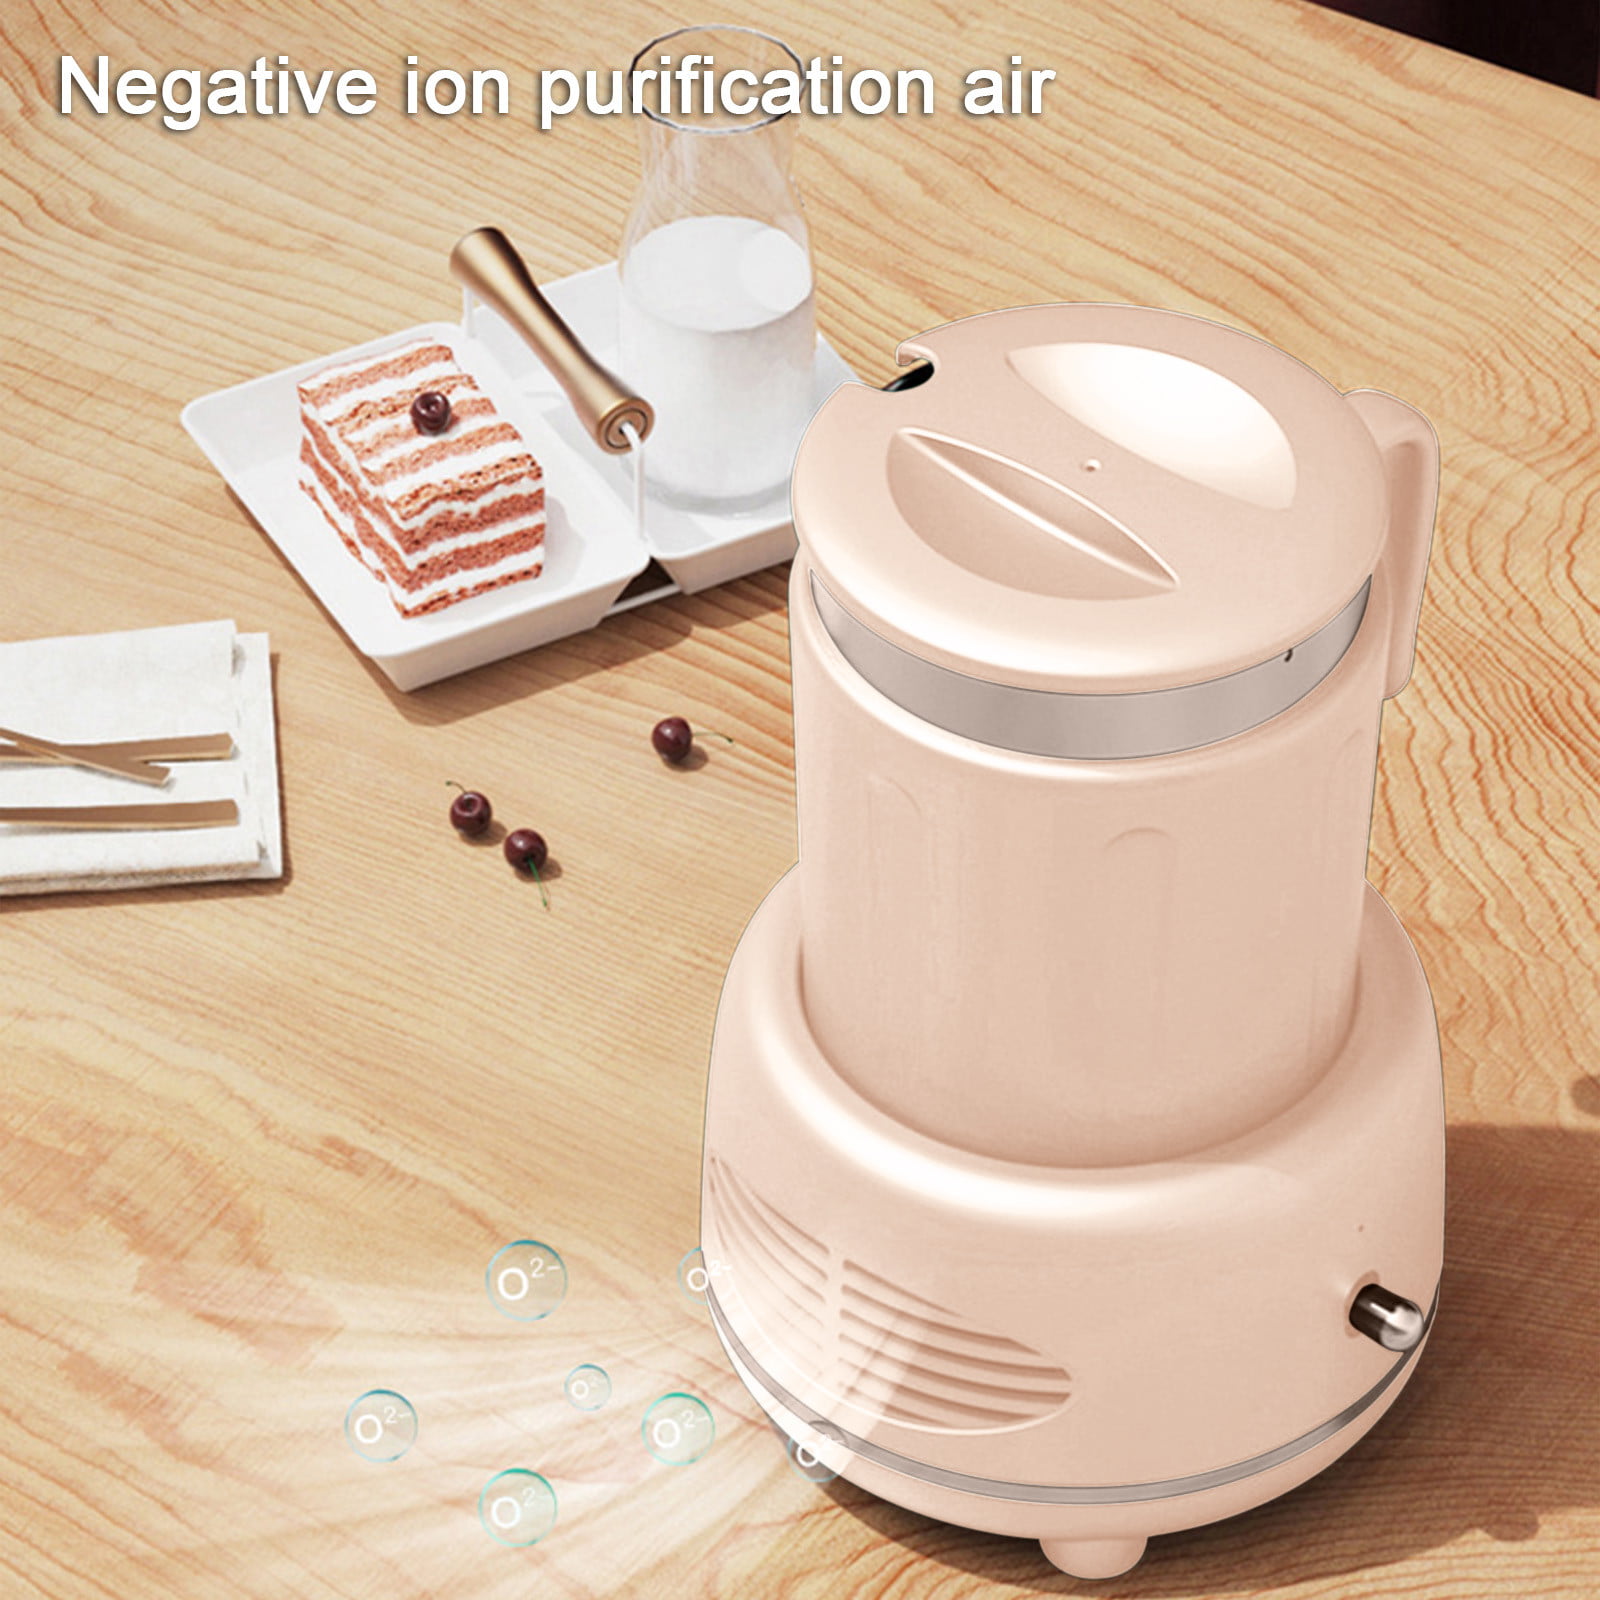 New 2 In 1 Desktop Drinks Cup Cooler Coffee Mug Warmer for Milk Tea Beer  Electric Heating Cooling Beverage Cup for Home Office